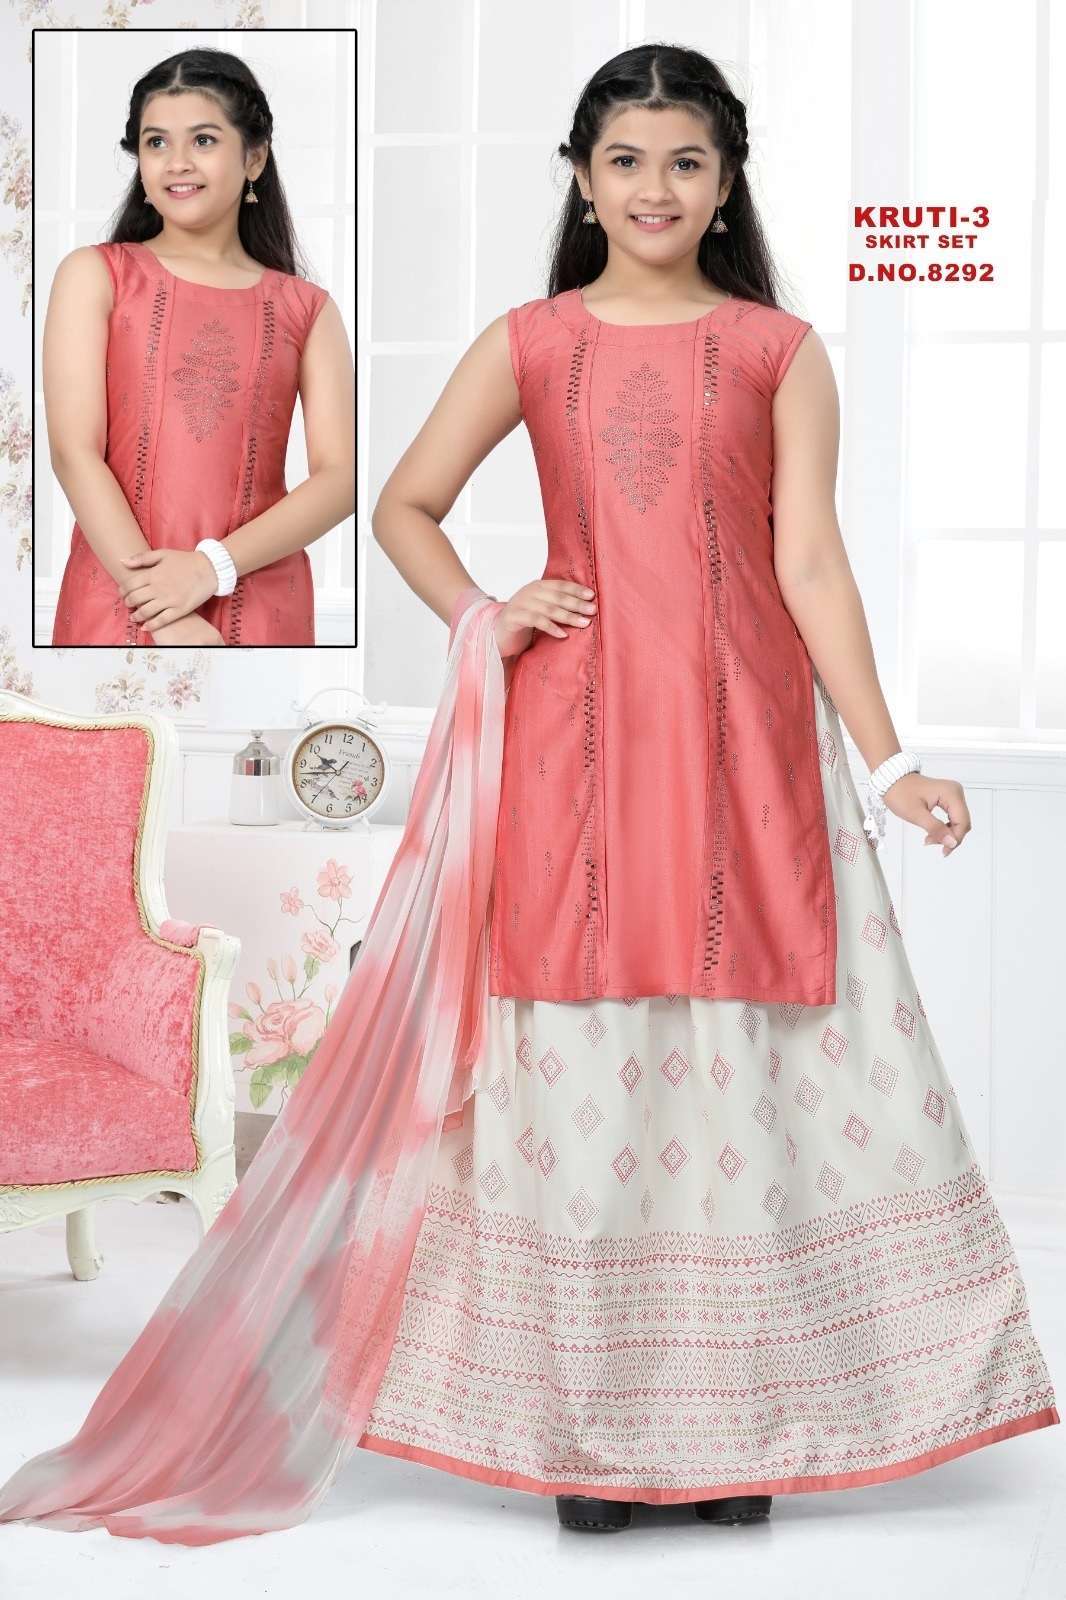 Cotton Printed 1061 Ladies Skirt Kurti Dress at Rs 1000 in Hanumangarh |  ID: 19141594191